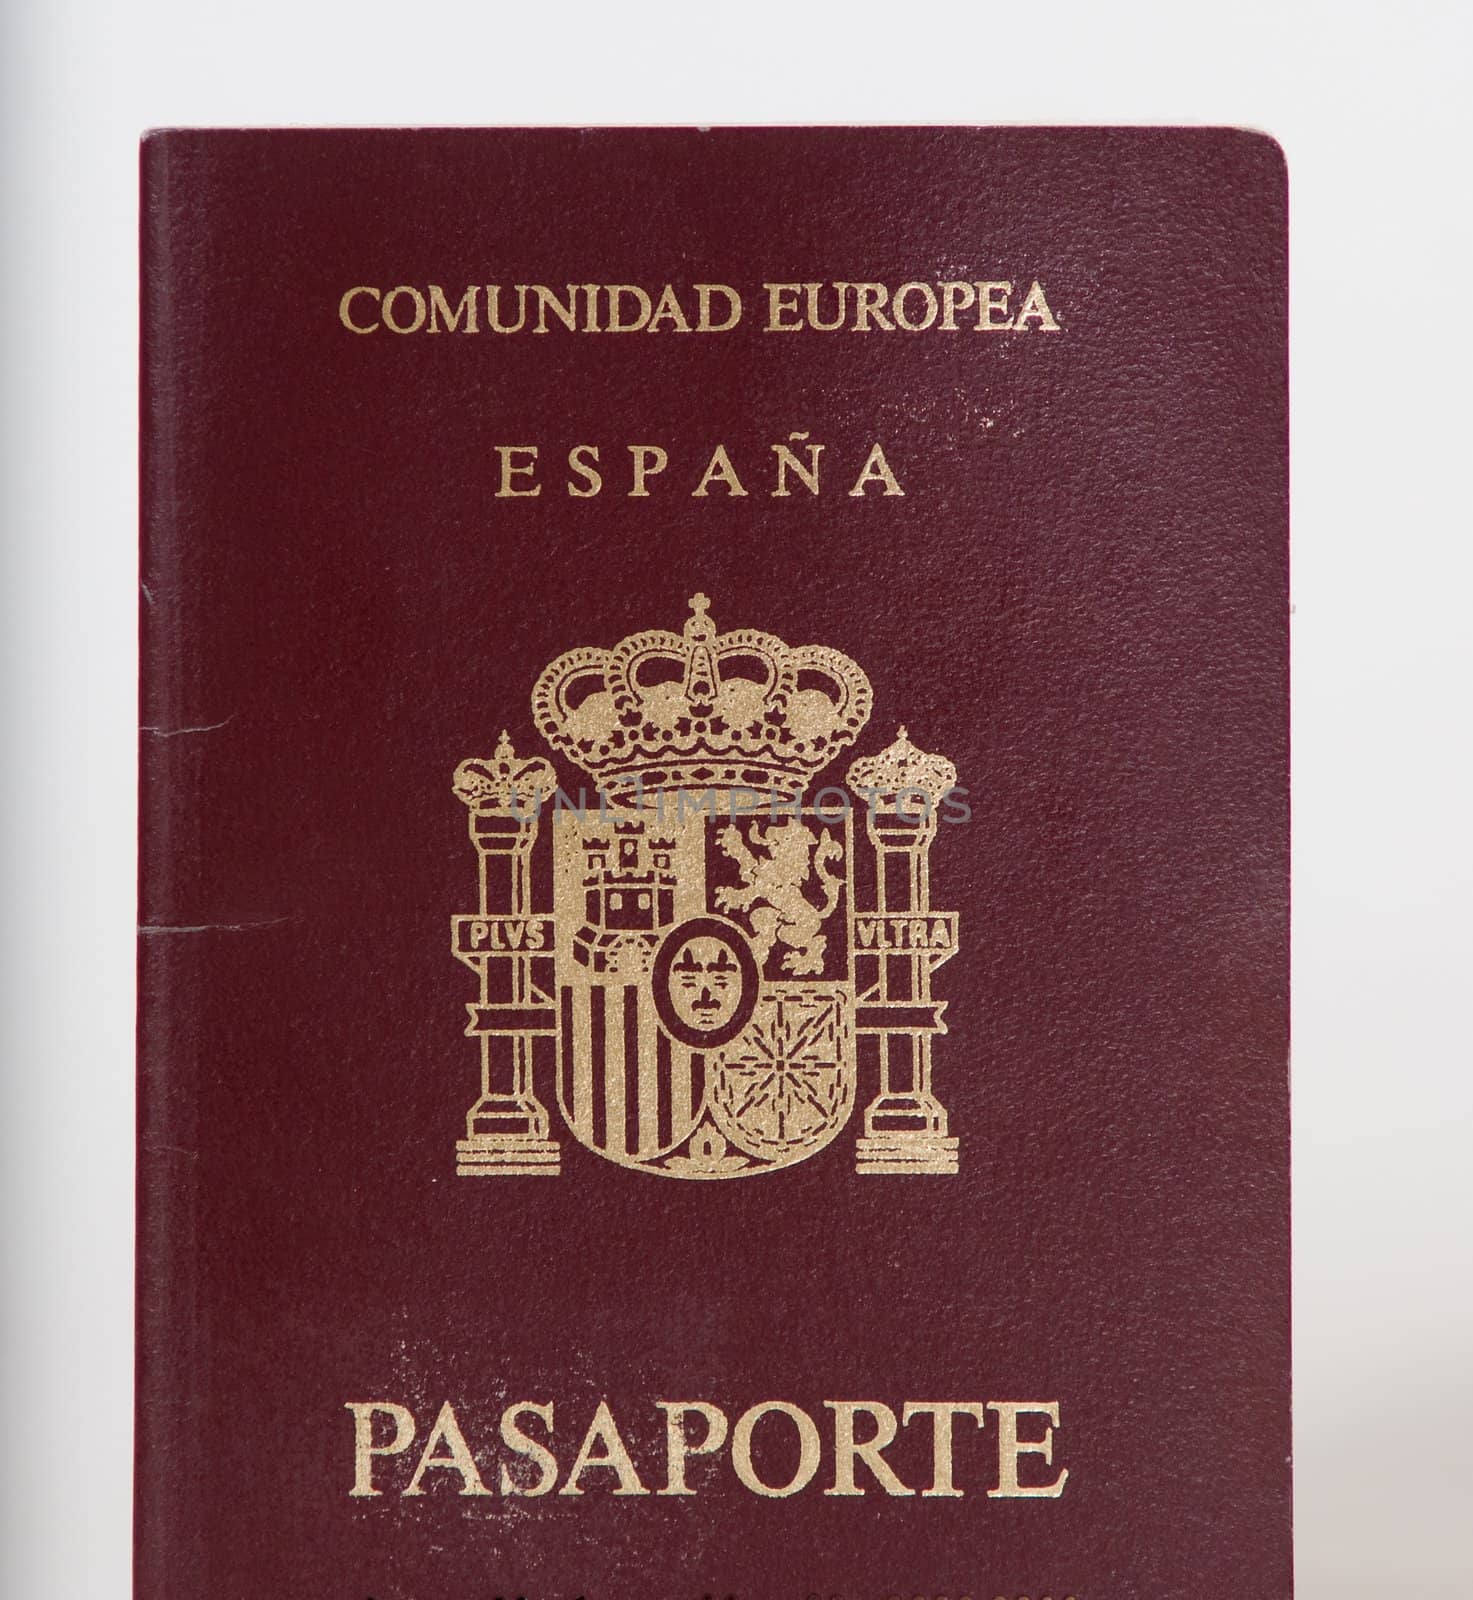 Passport by olgaolga